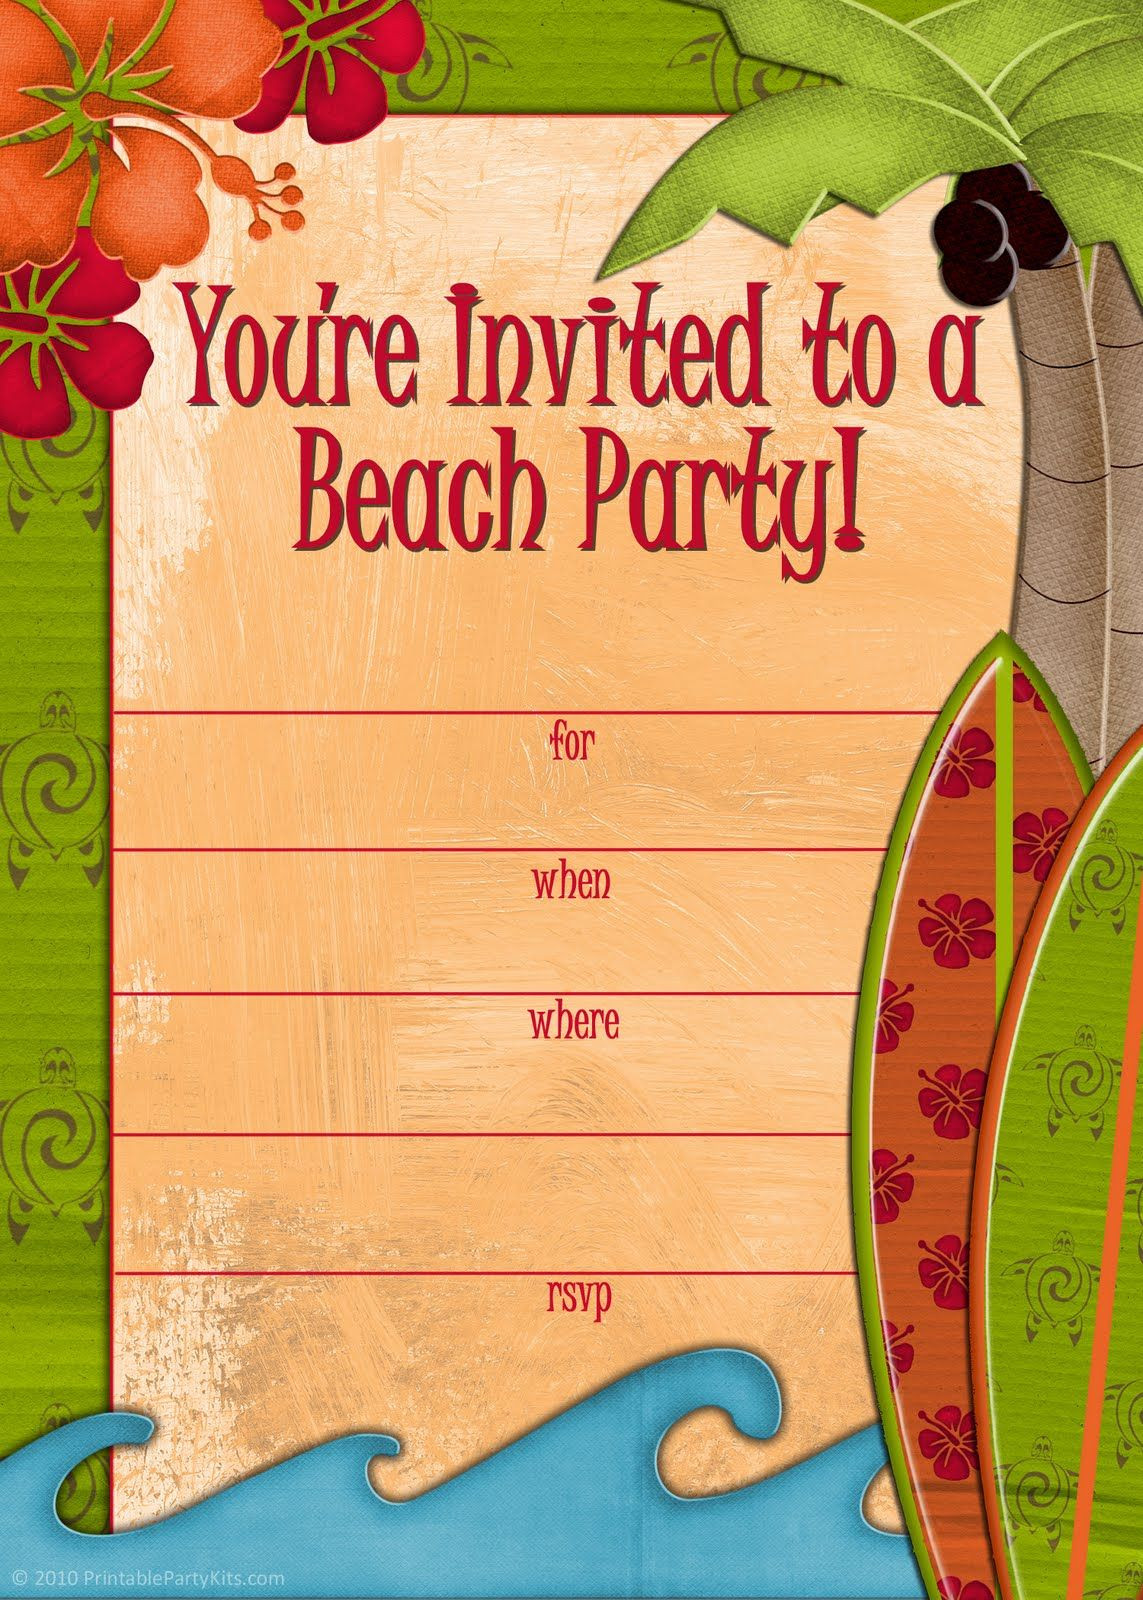 Beach Party Invitation Wording Ideas
 Free printable beach party invitations from